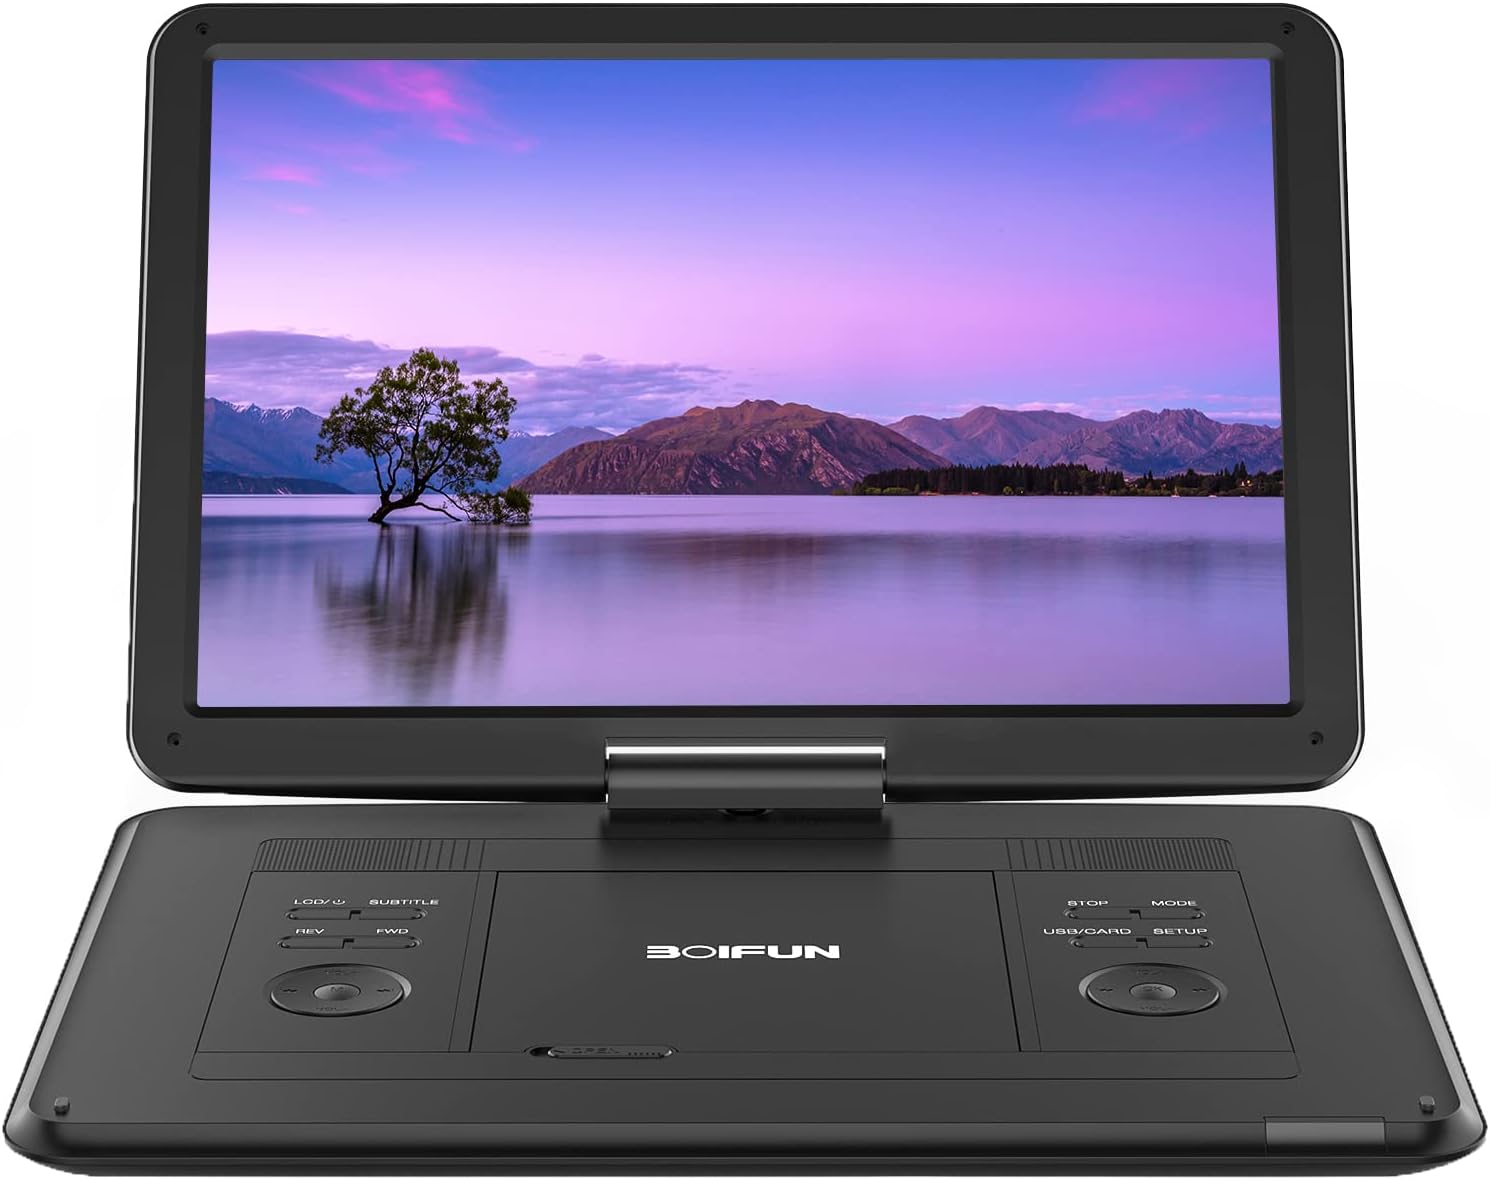 BOIFUN 17.5" Portable DVD Player with 15.6" Large HD Screen, Black - $50